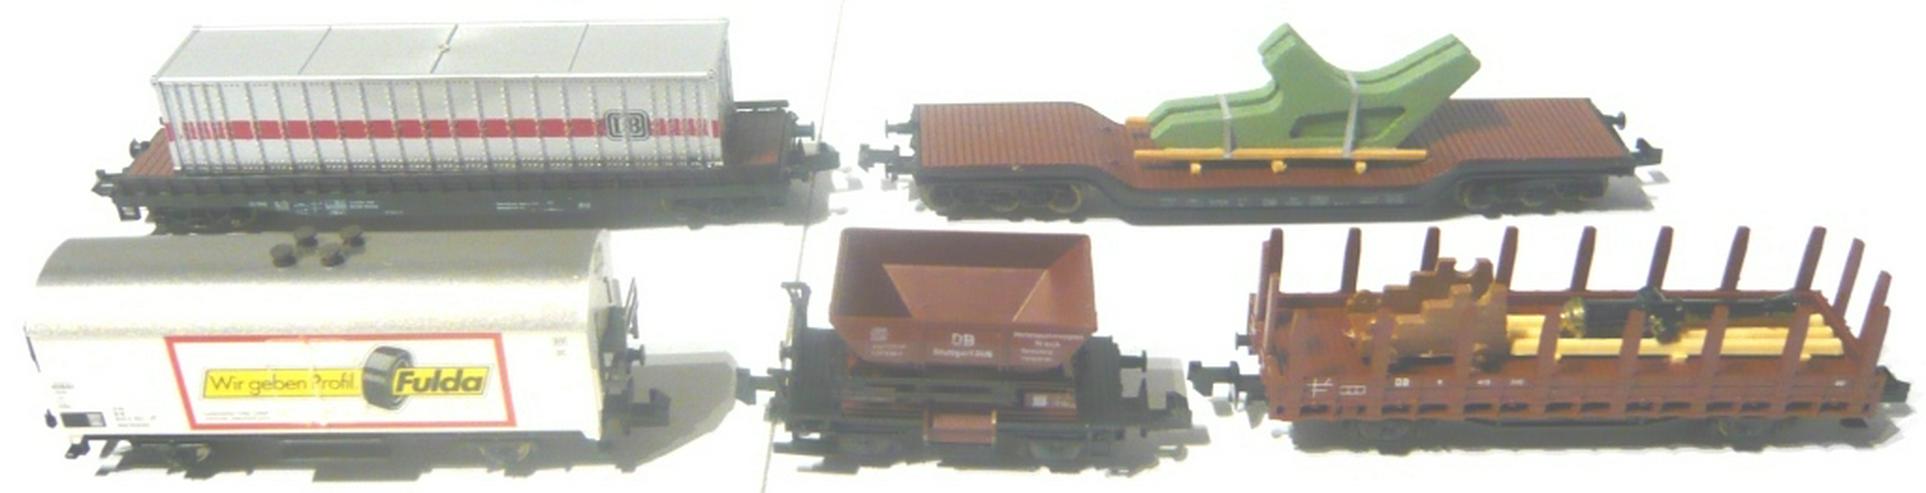 Roco Trix N Güterzug Set 5 Wagen in Verpackung GUT - Spur N - Bild 3